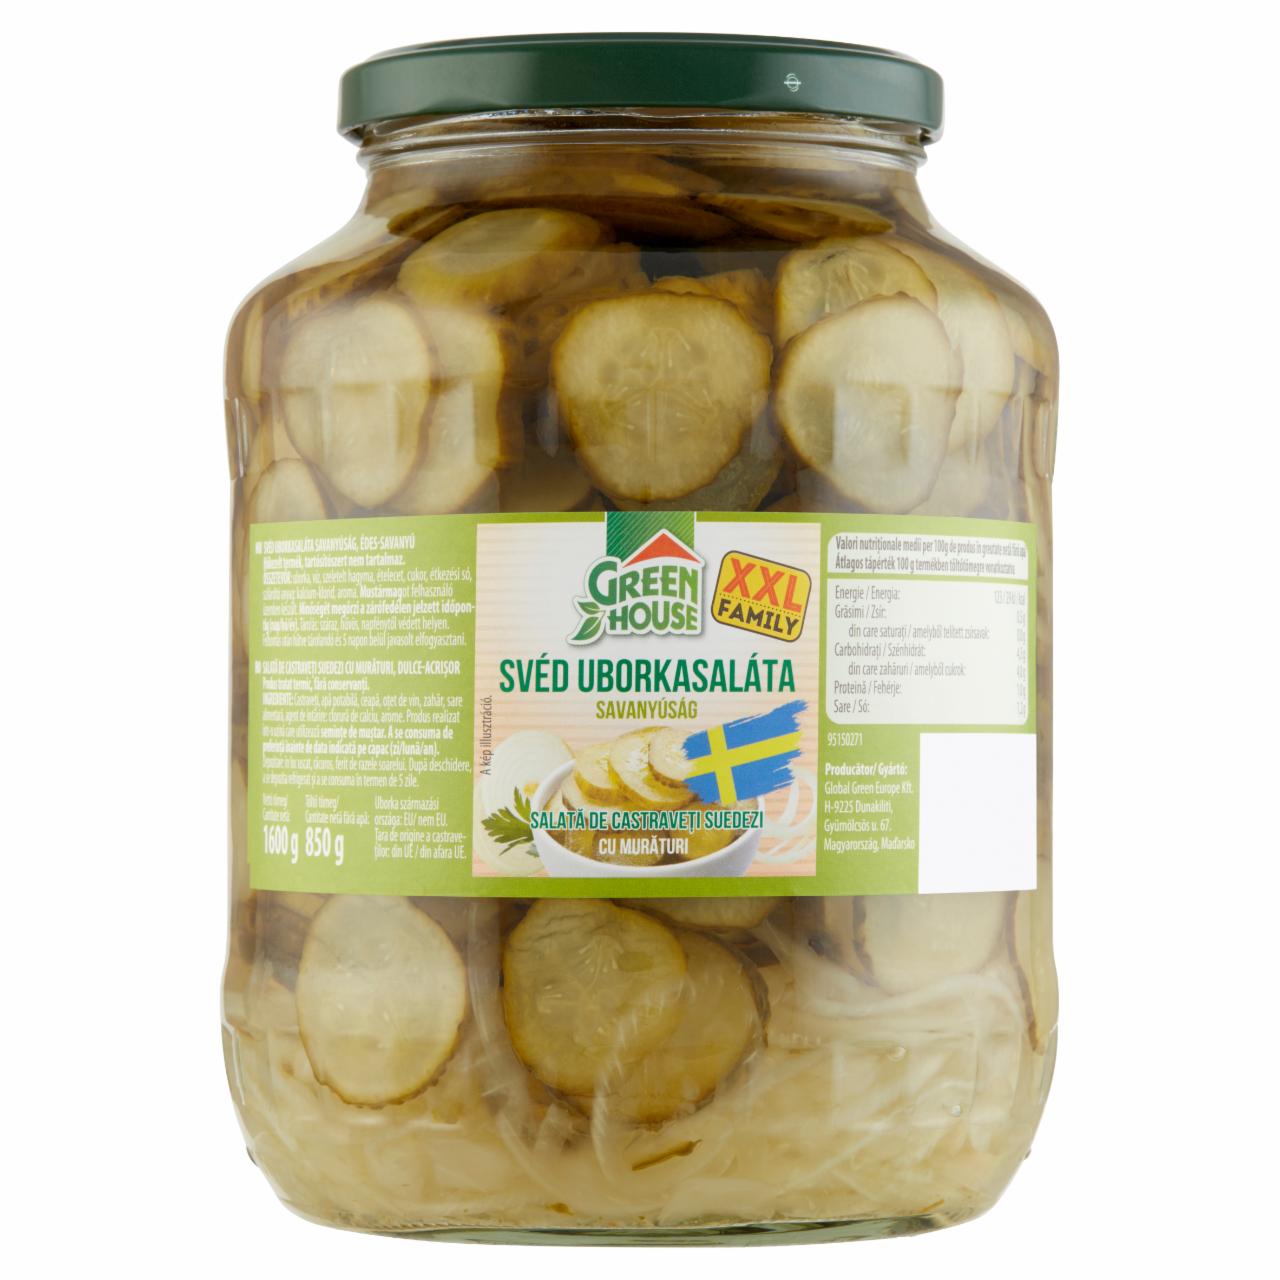 Képek - Greenhouse édes-savanyú svéd uborkasaláta savanyúság 1600 g 